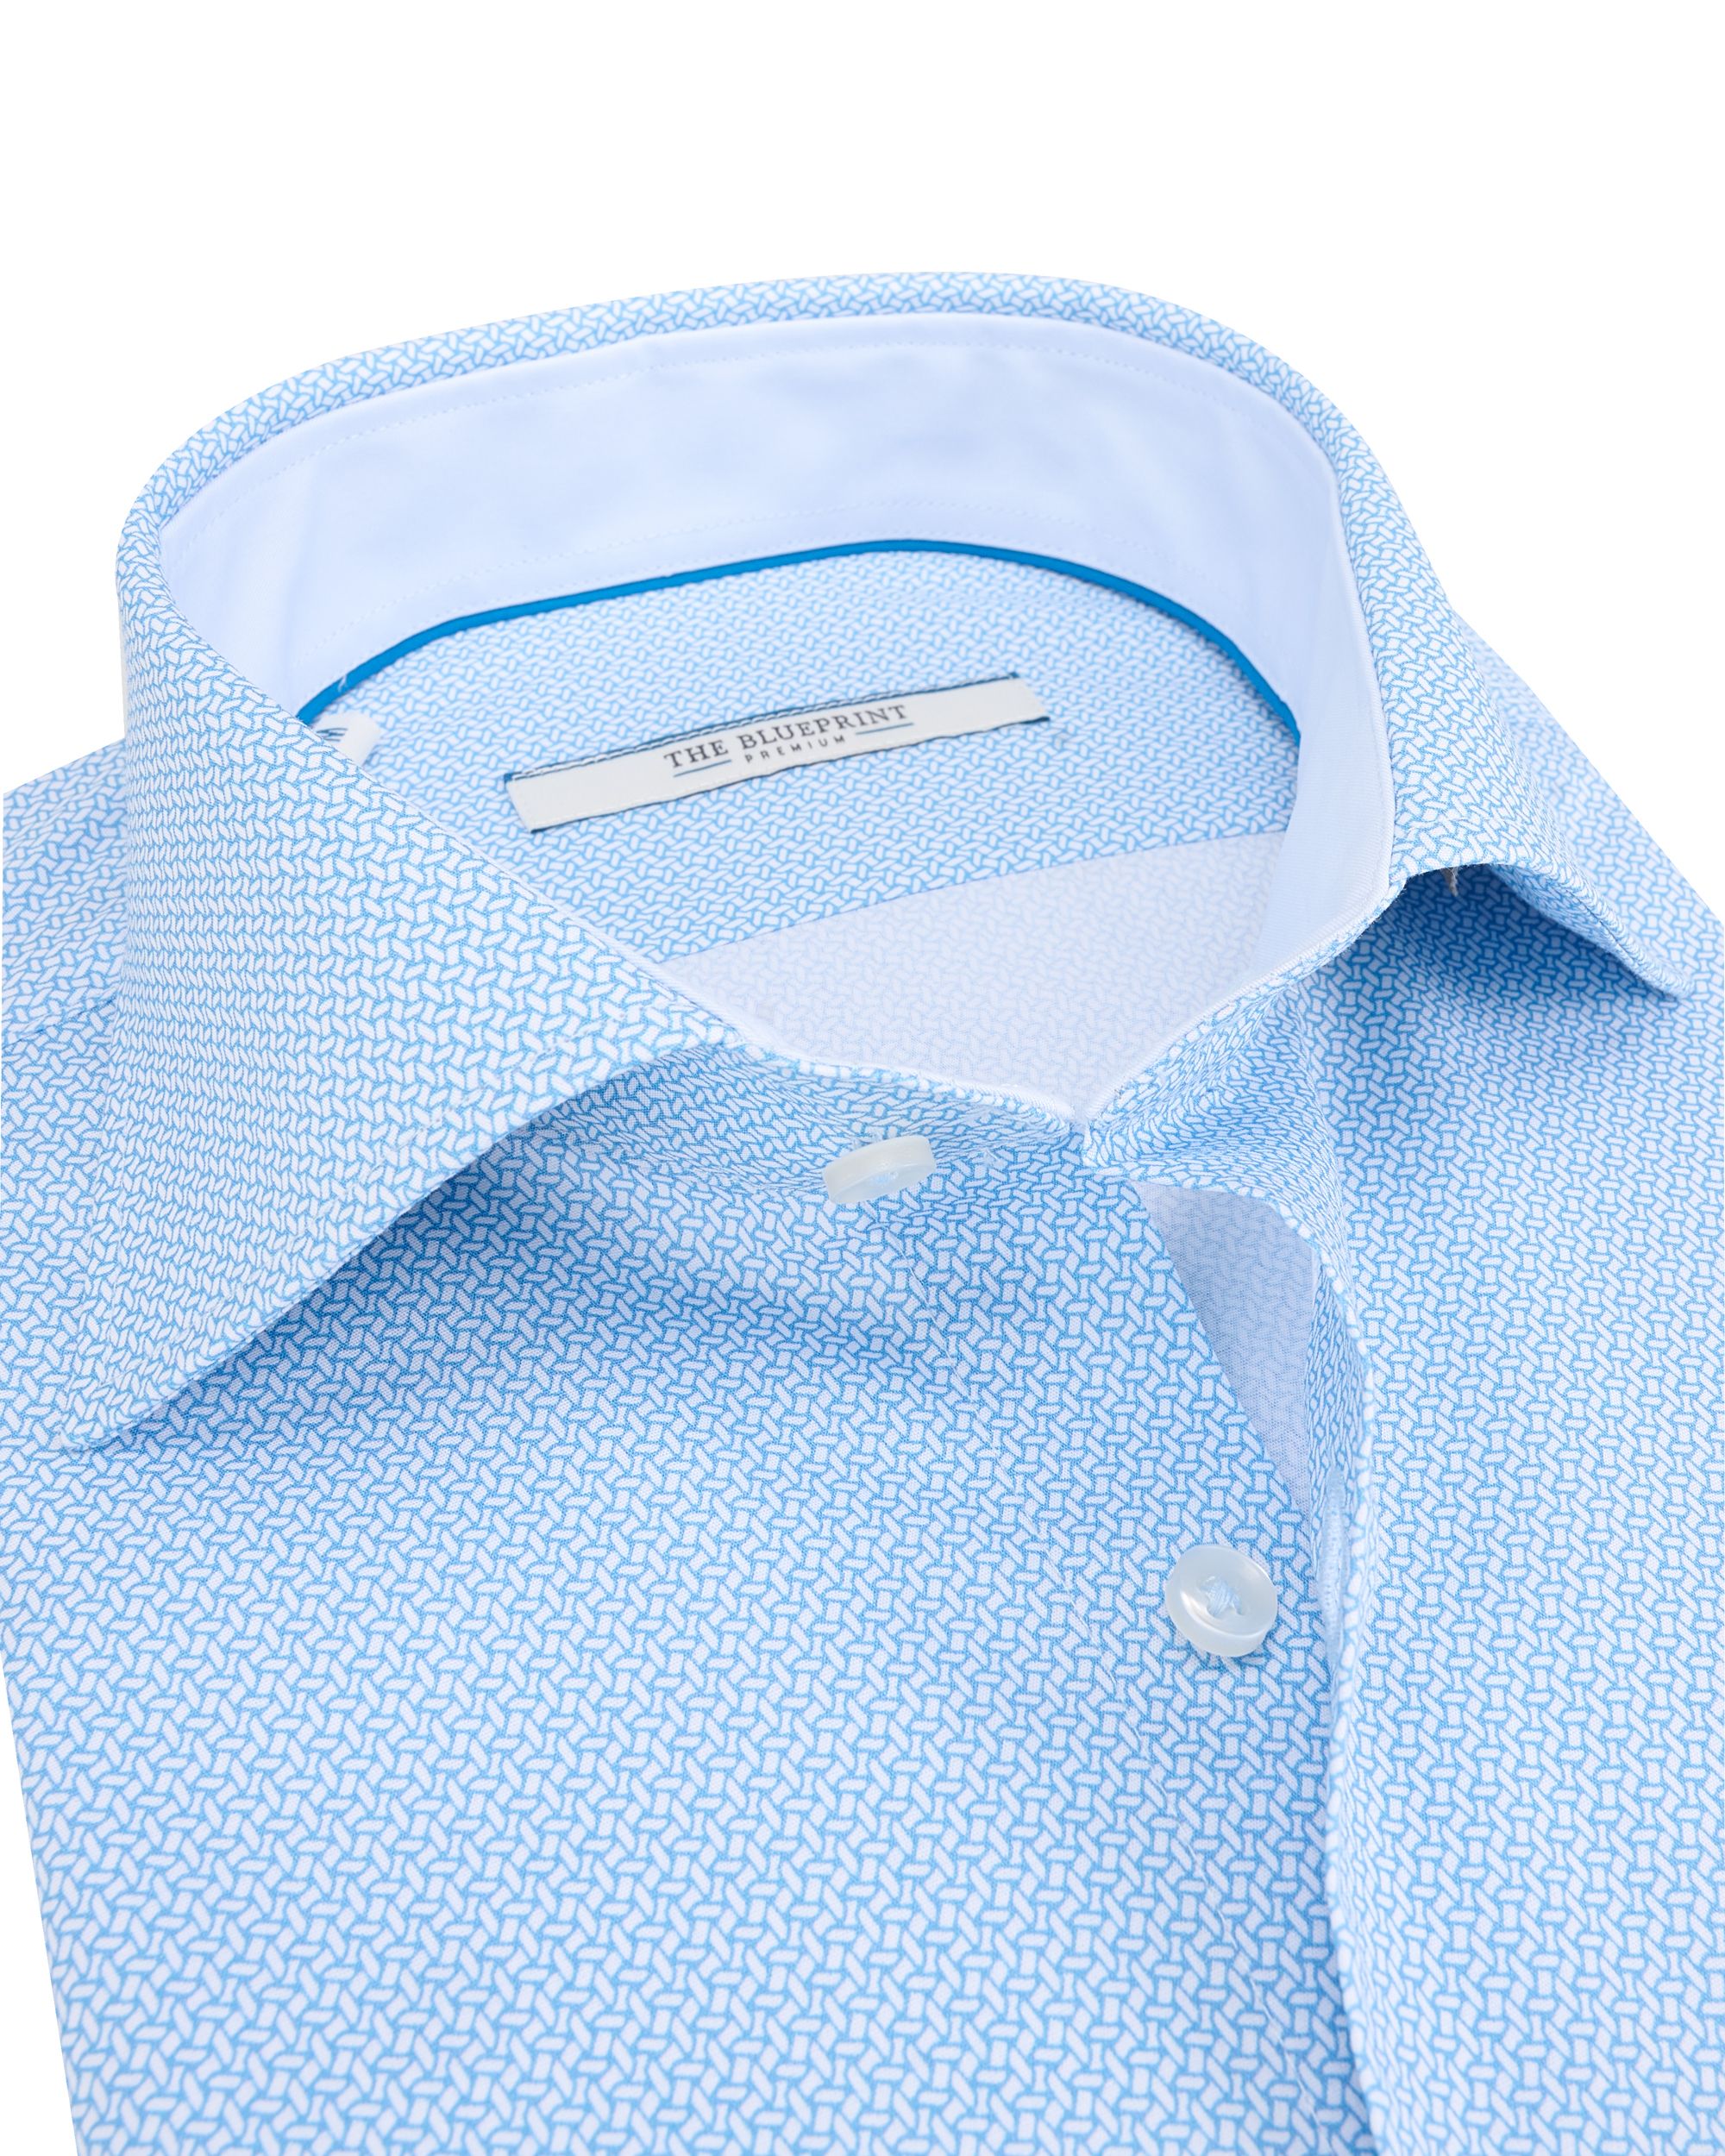 The BLUEPRINT Premium -Trendy Overhemd LM Wit dessin 094224-001-L